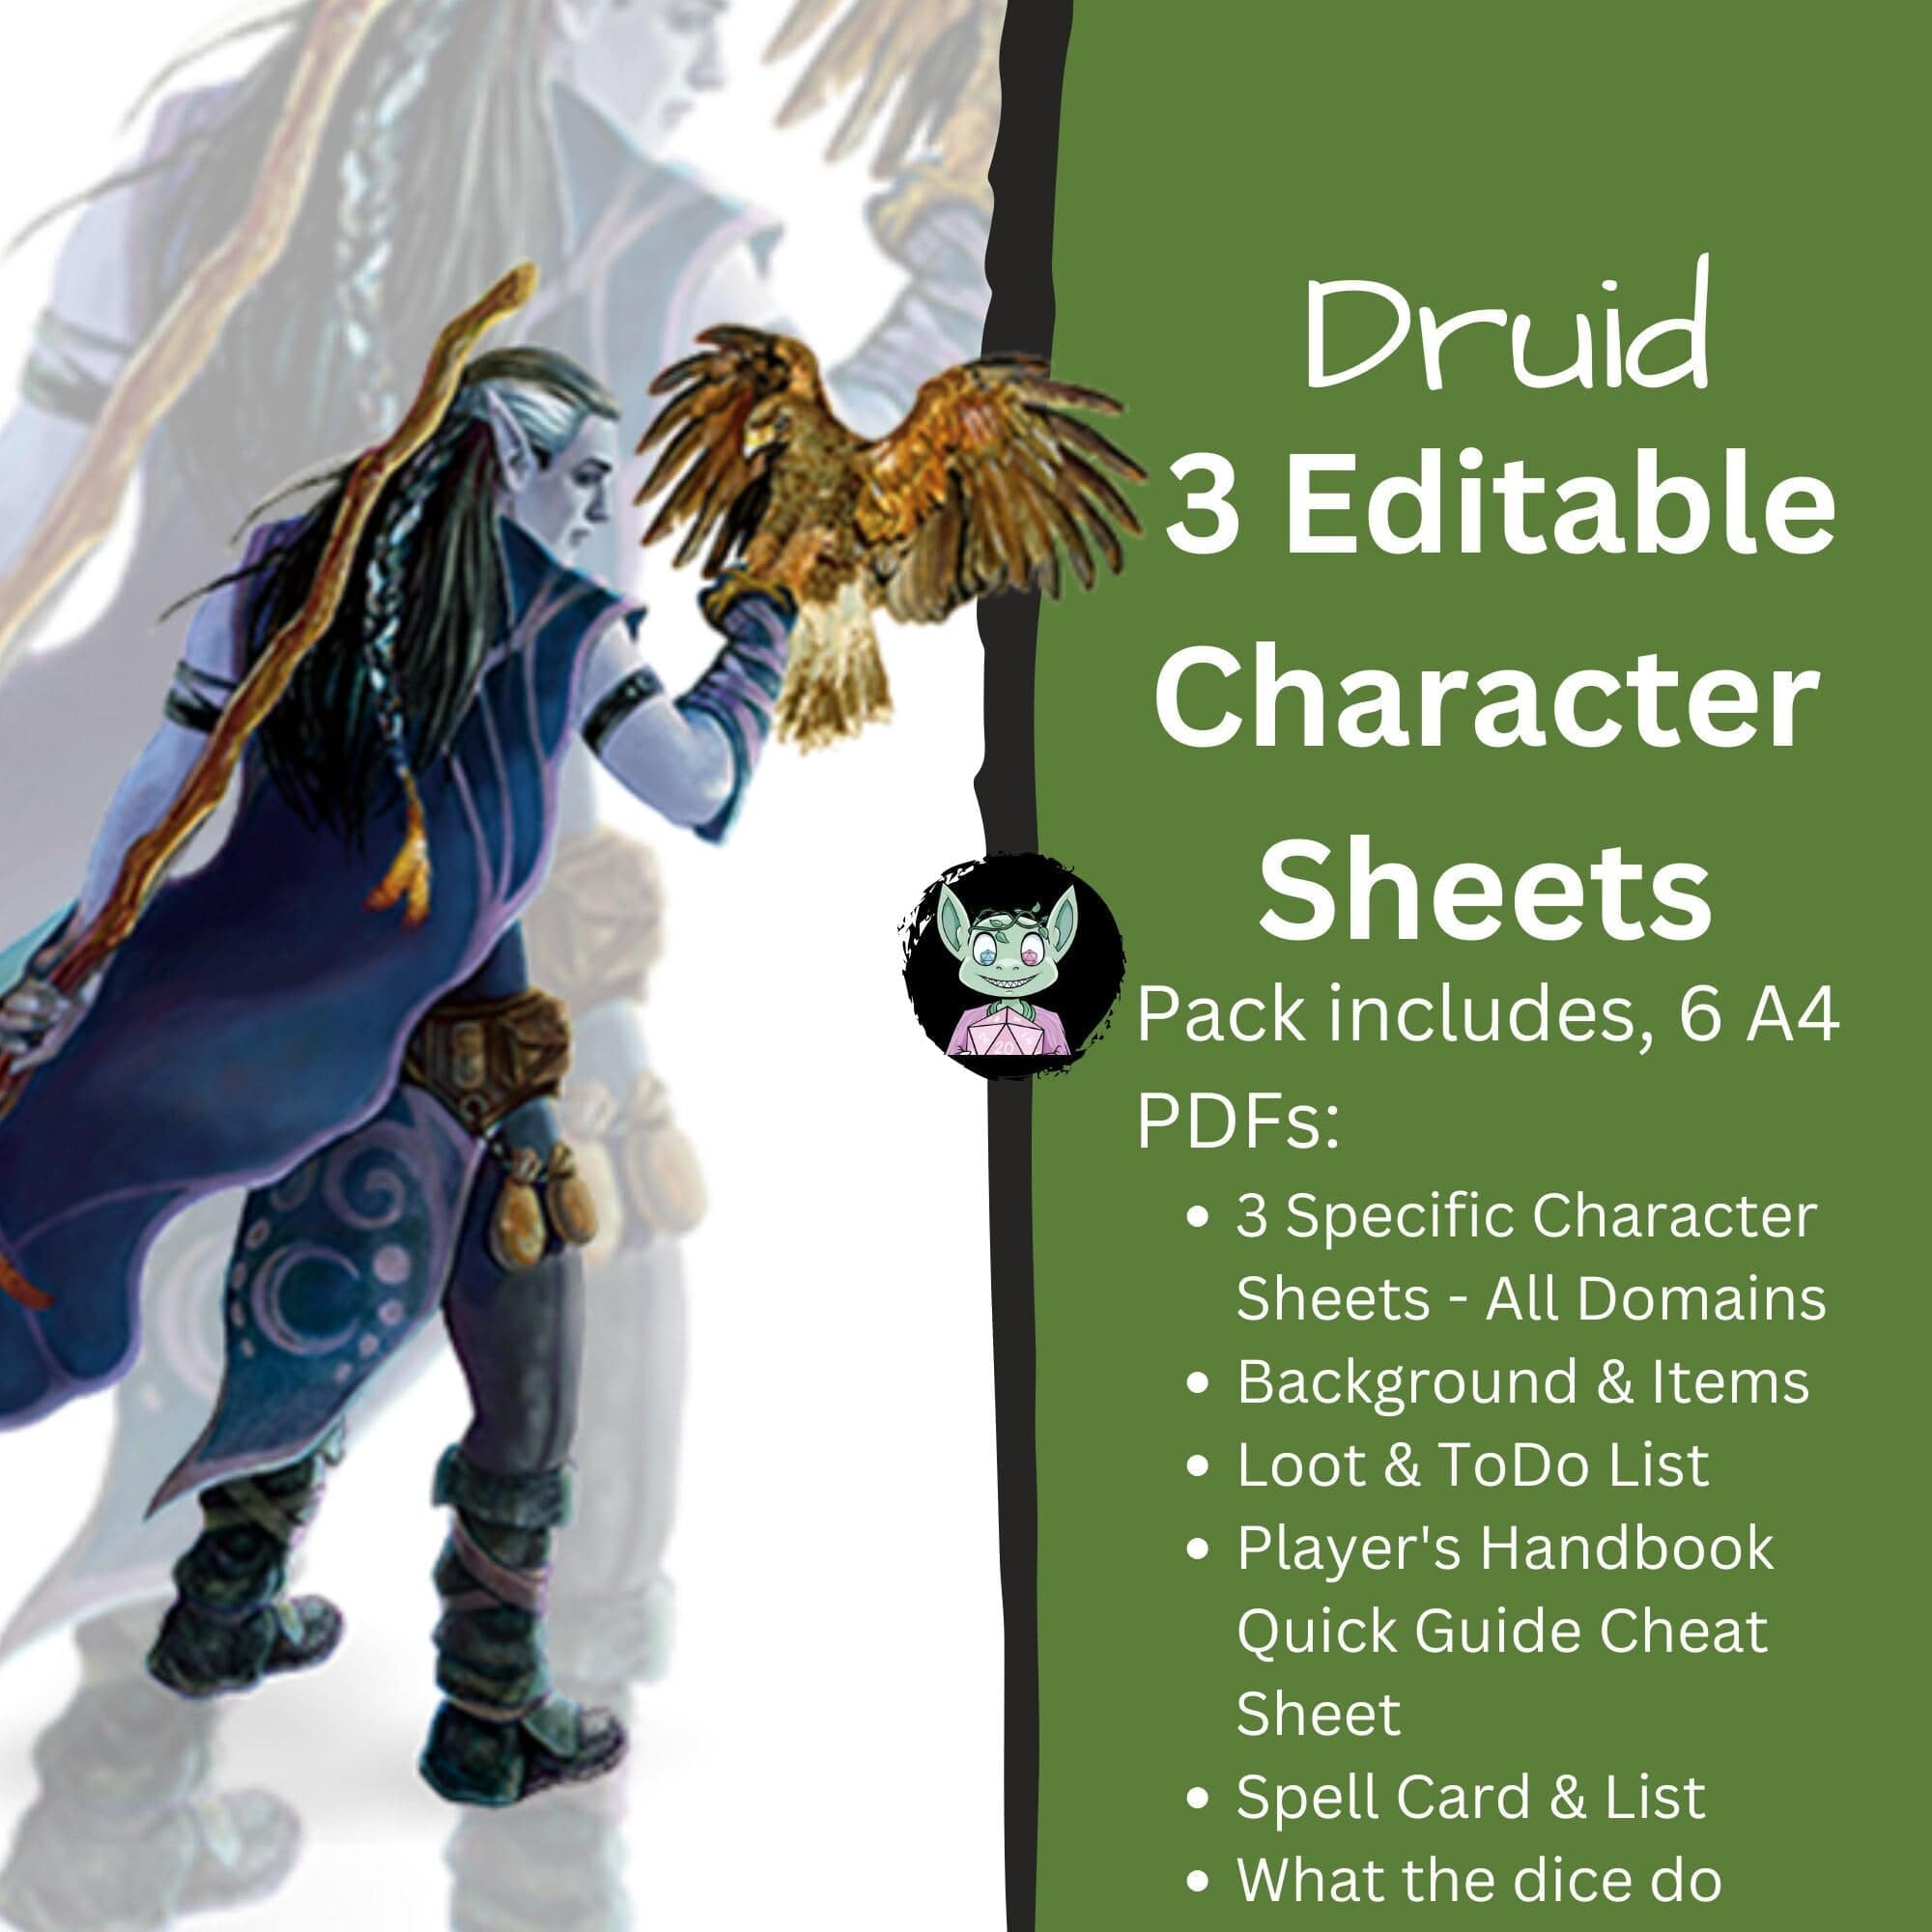 DnD Druid Character Sheet - Mystery Dice Goblin